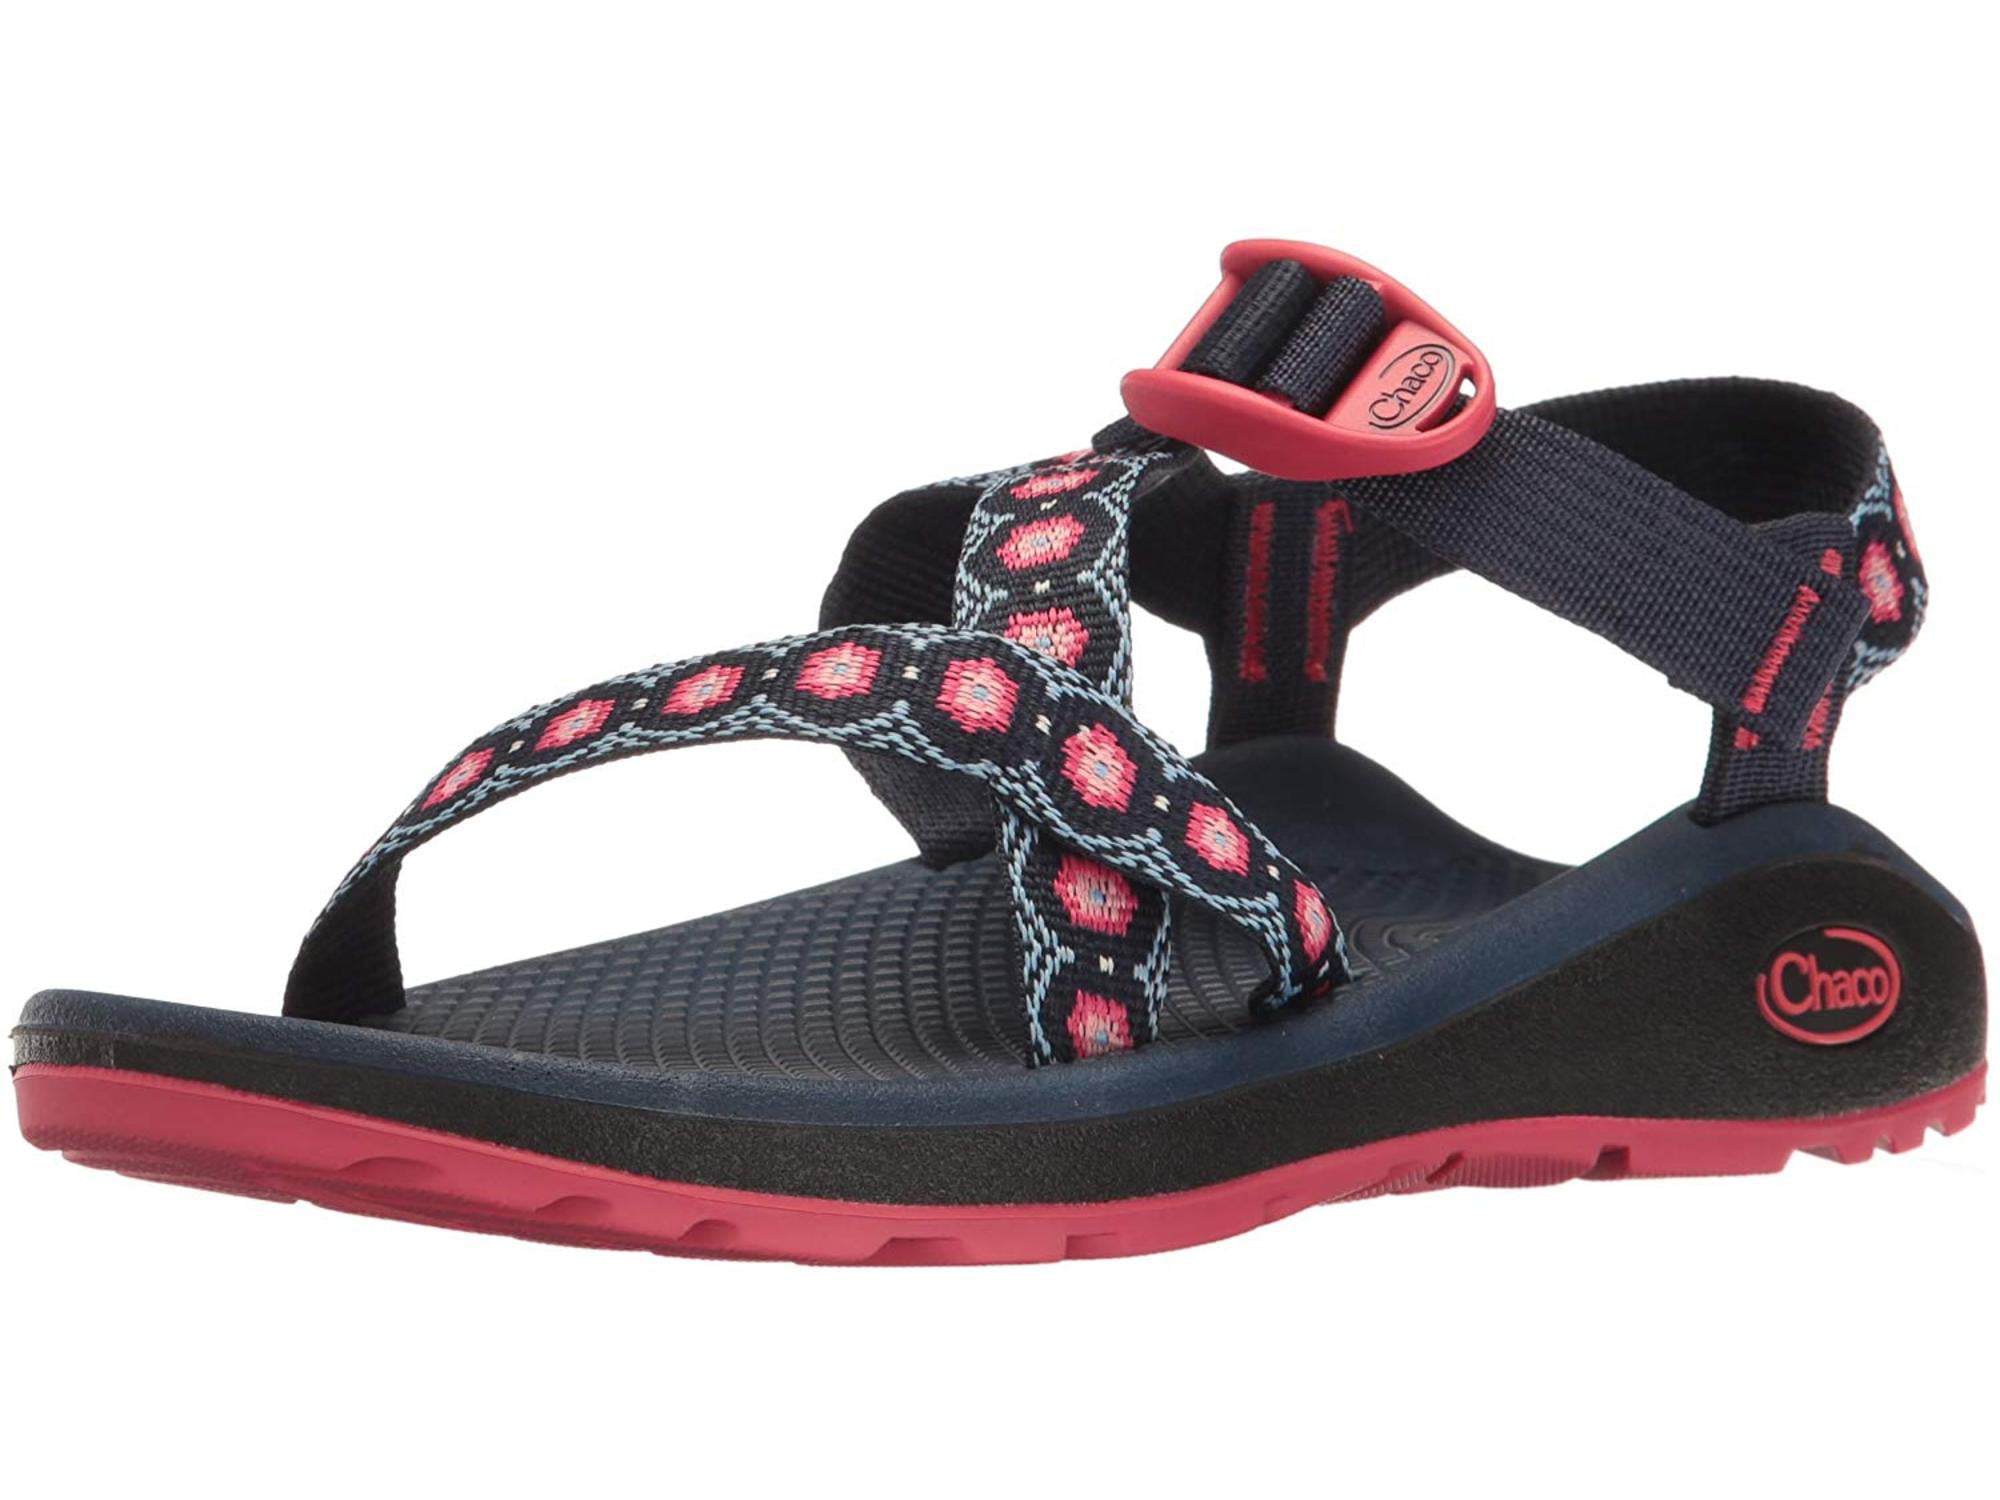 chaco women's zcloud sport sandal